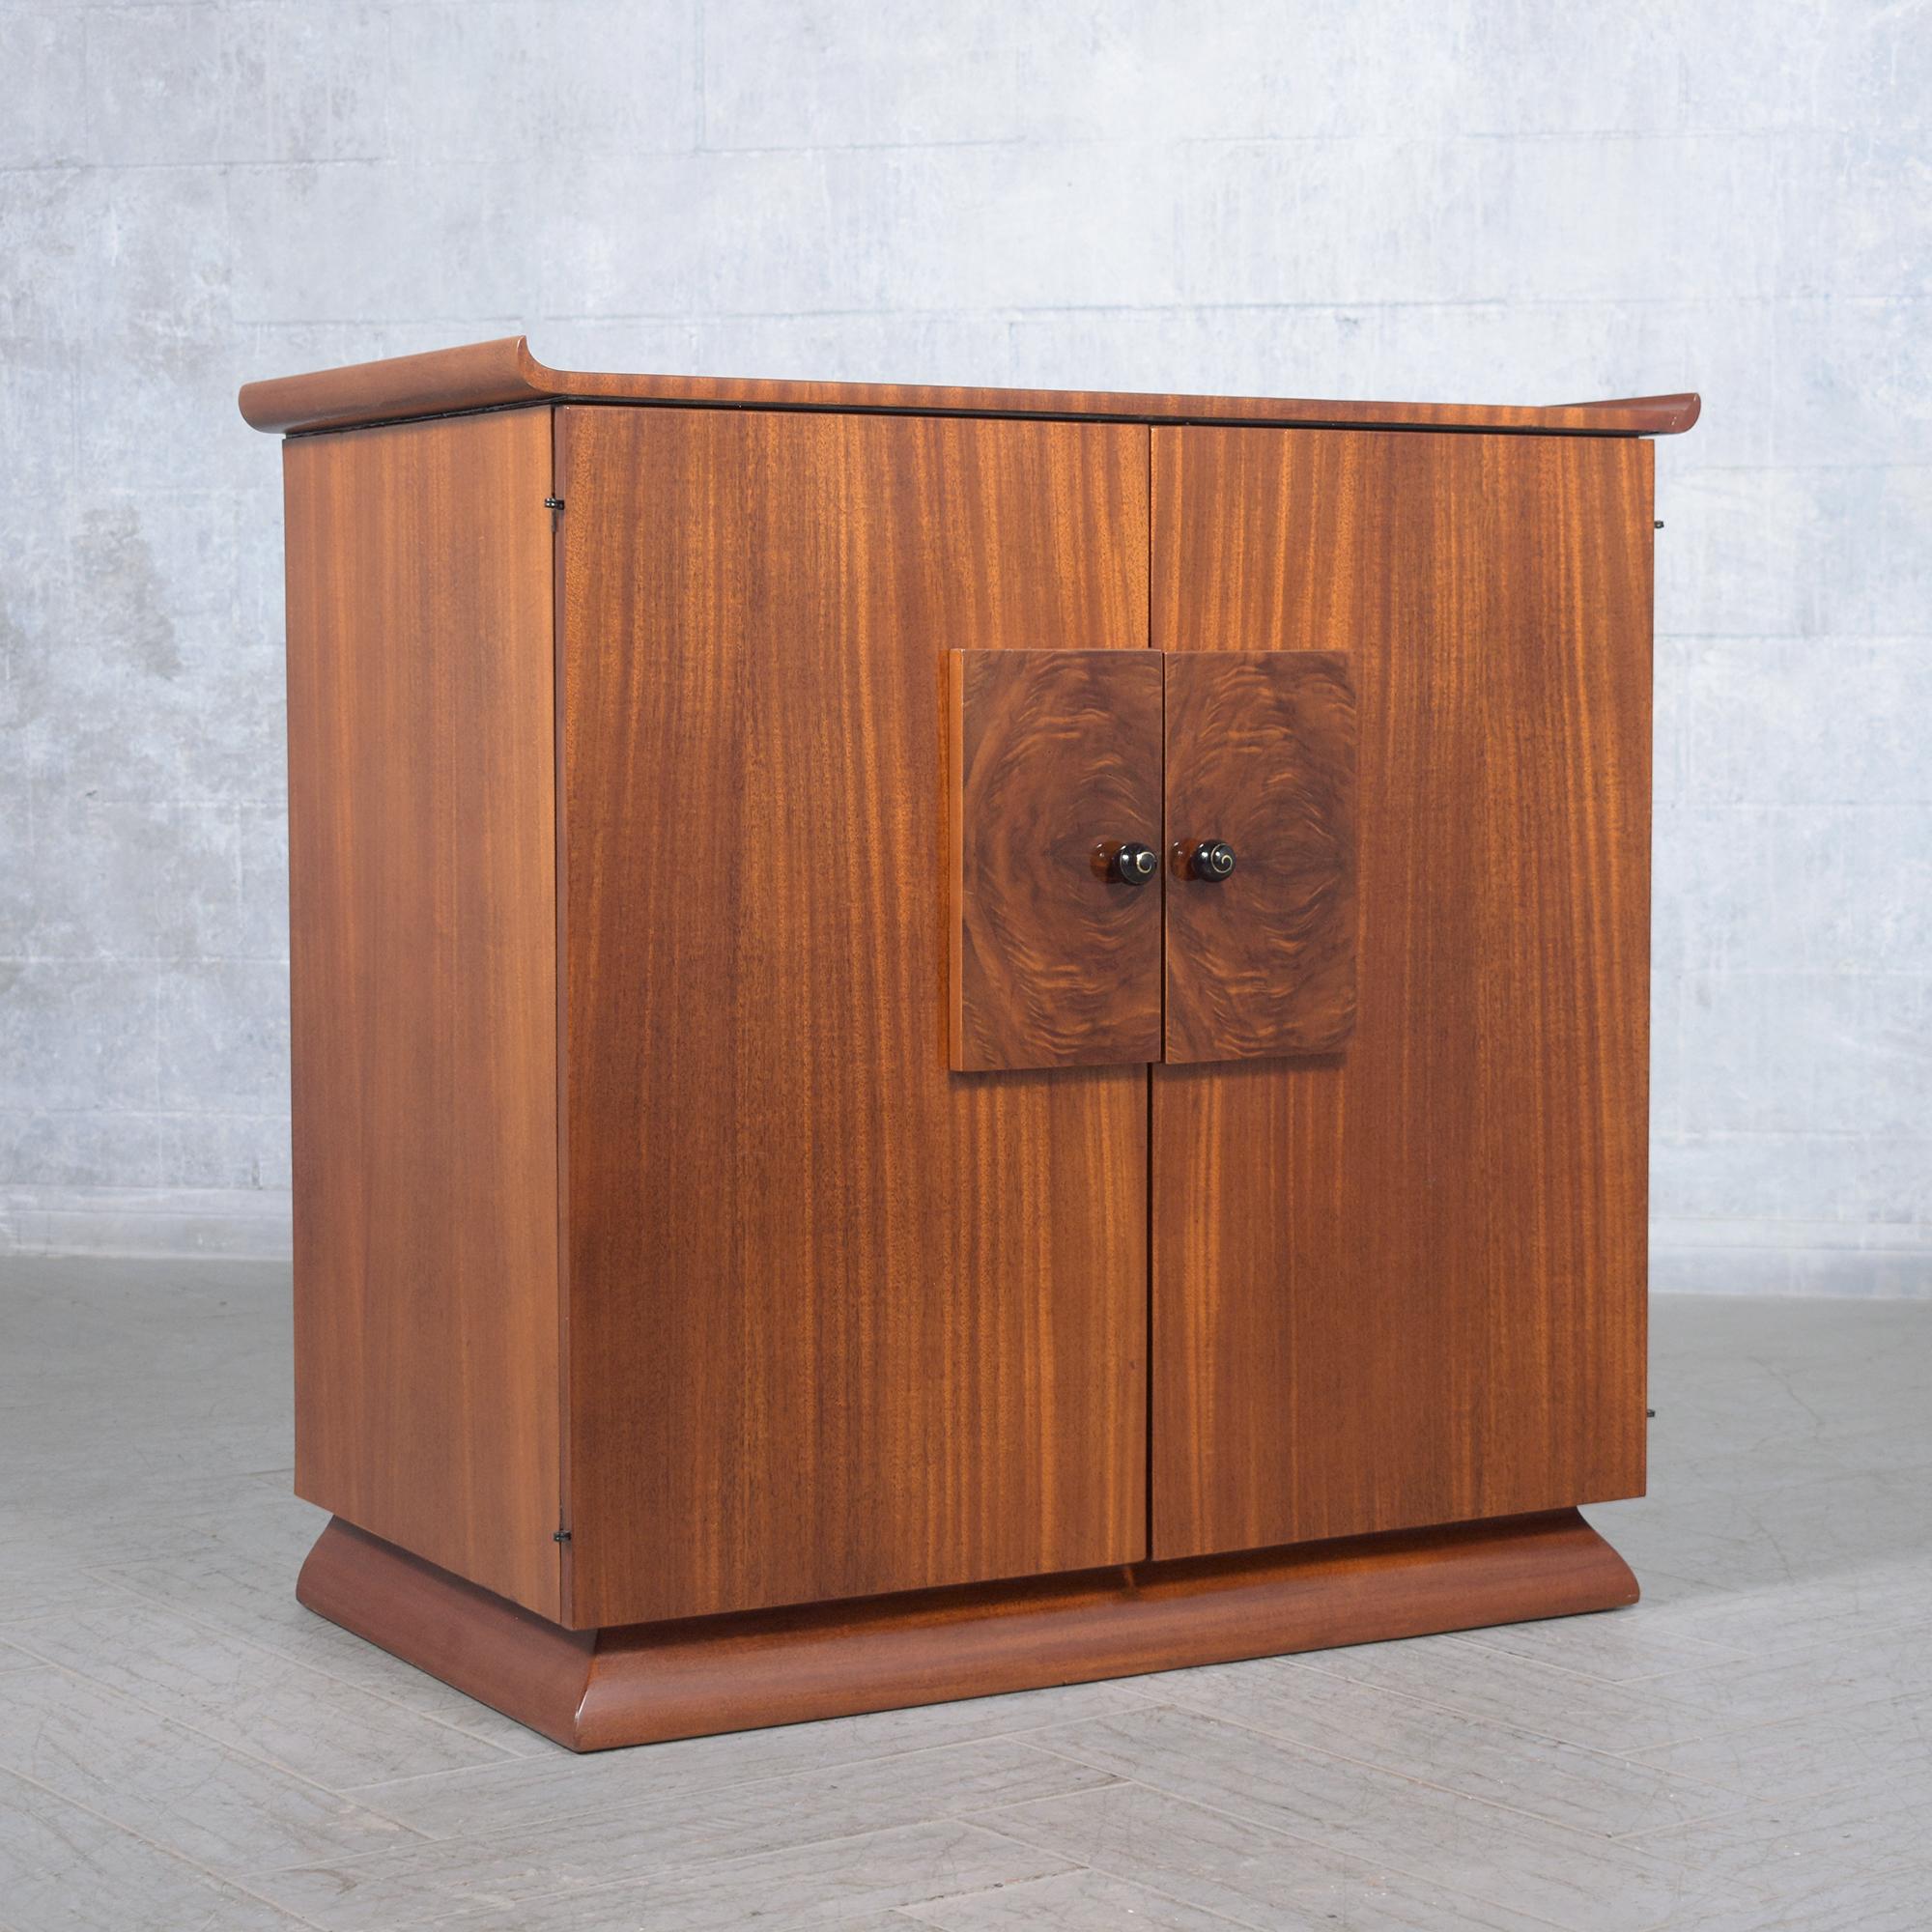 Restored Vintage Mid-Century Wood Cabinet with Burl Door Details For Sale 1